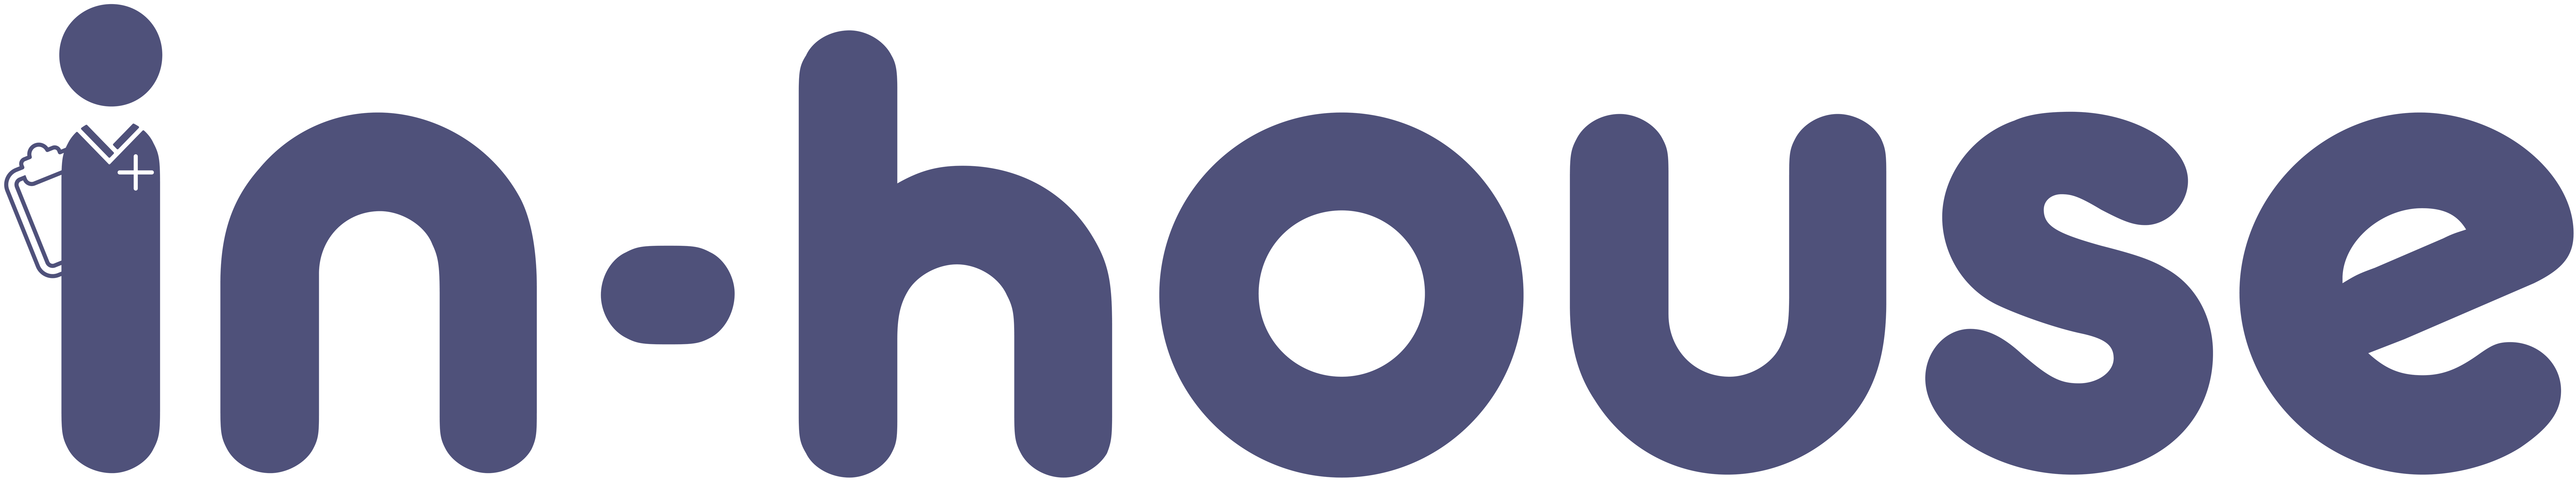 ibex logo image